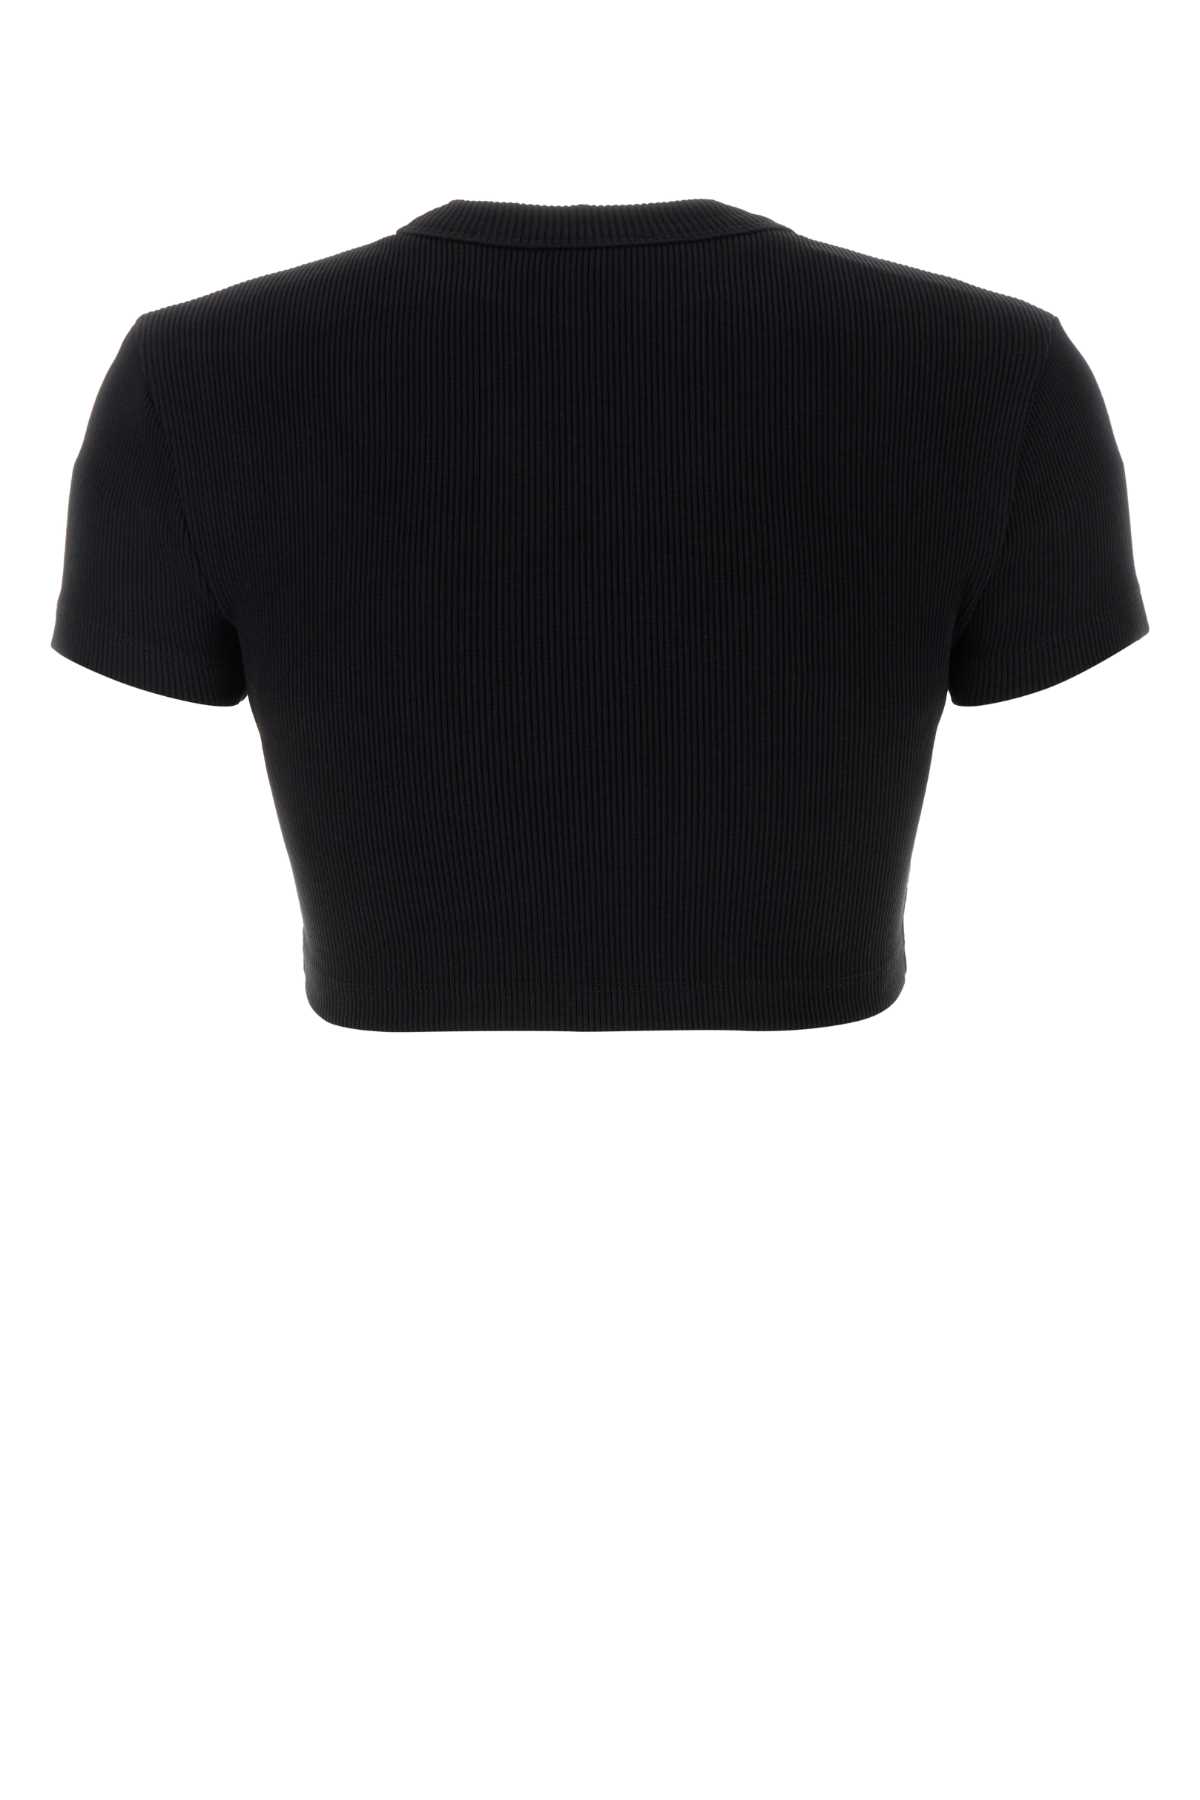 Alexander Wang T Black Stretch Cotton T-shirt